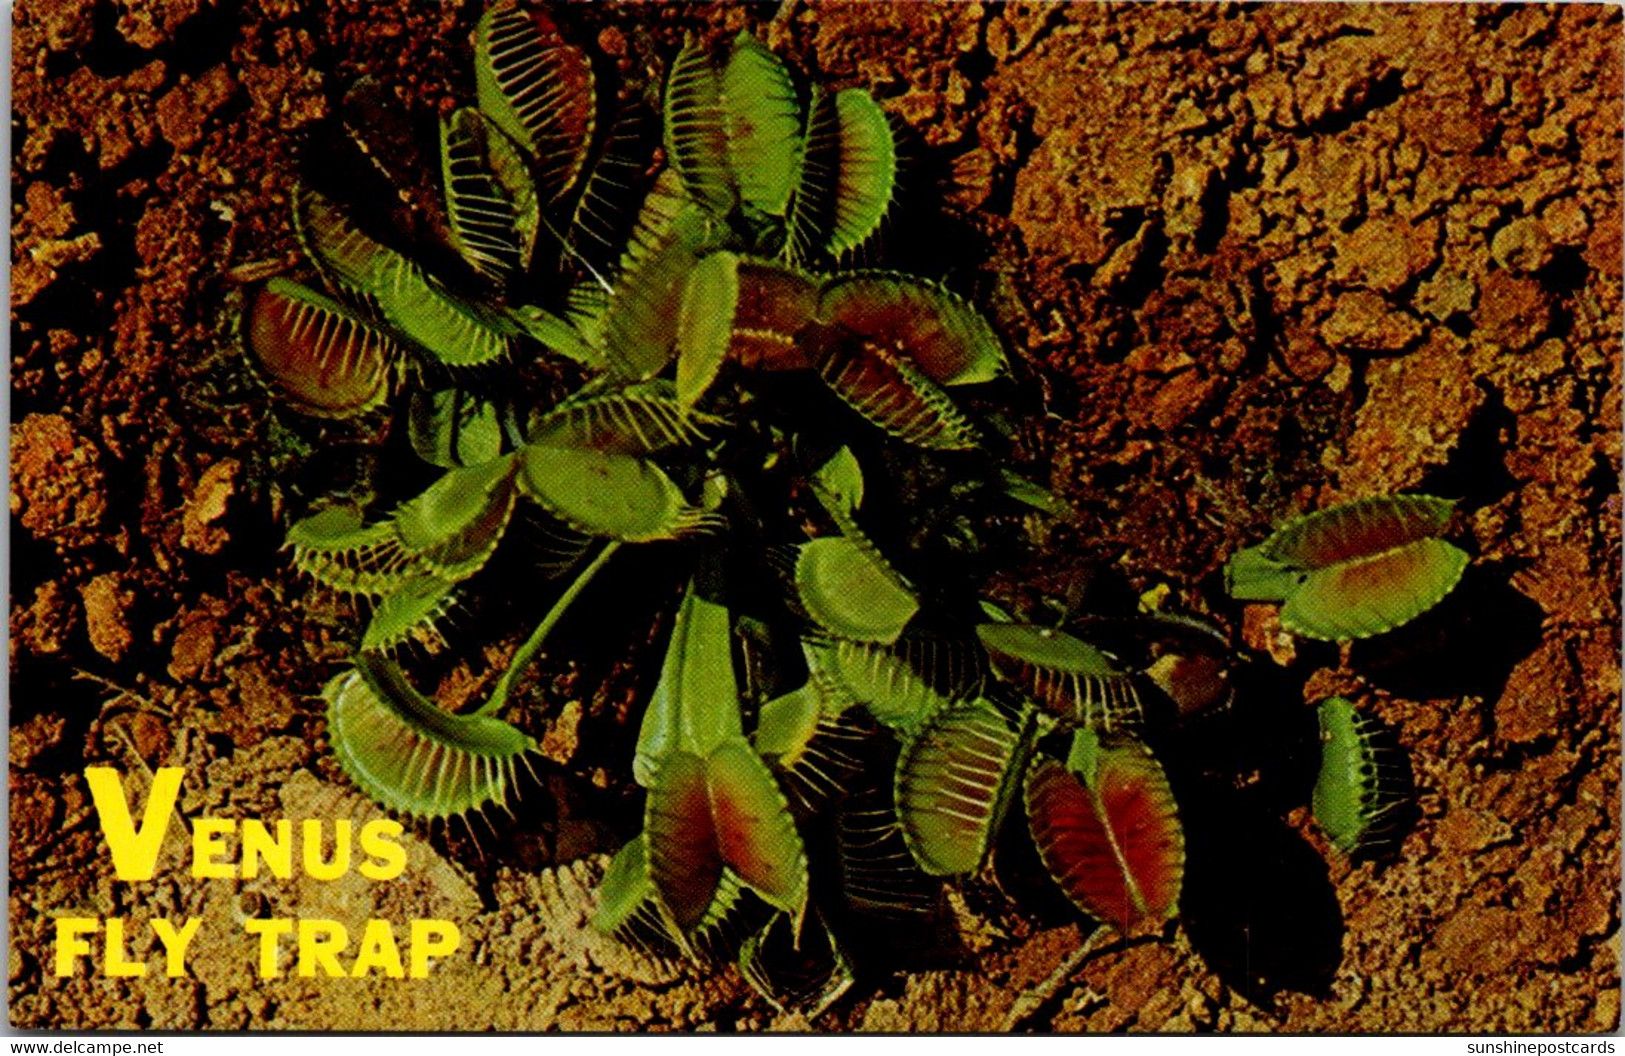 Plants Venus Fly Trap - Toxic Plants